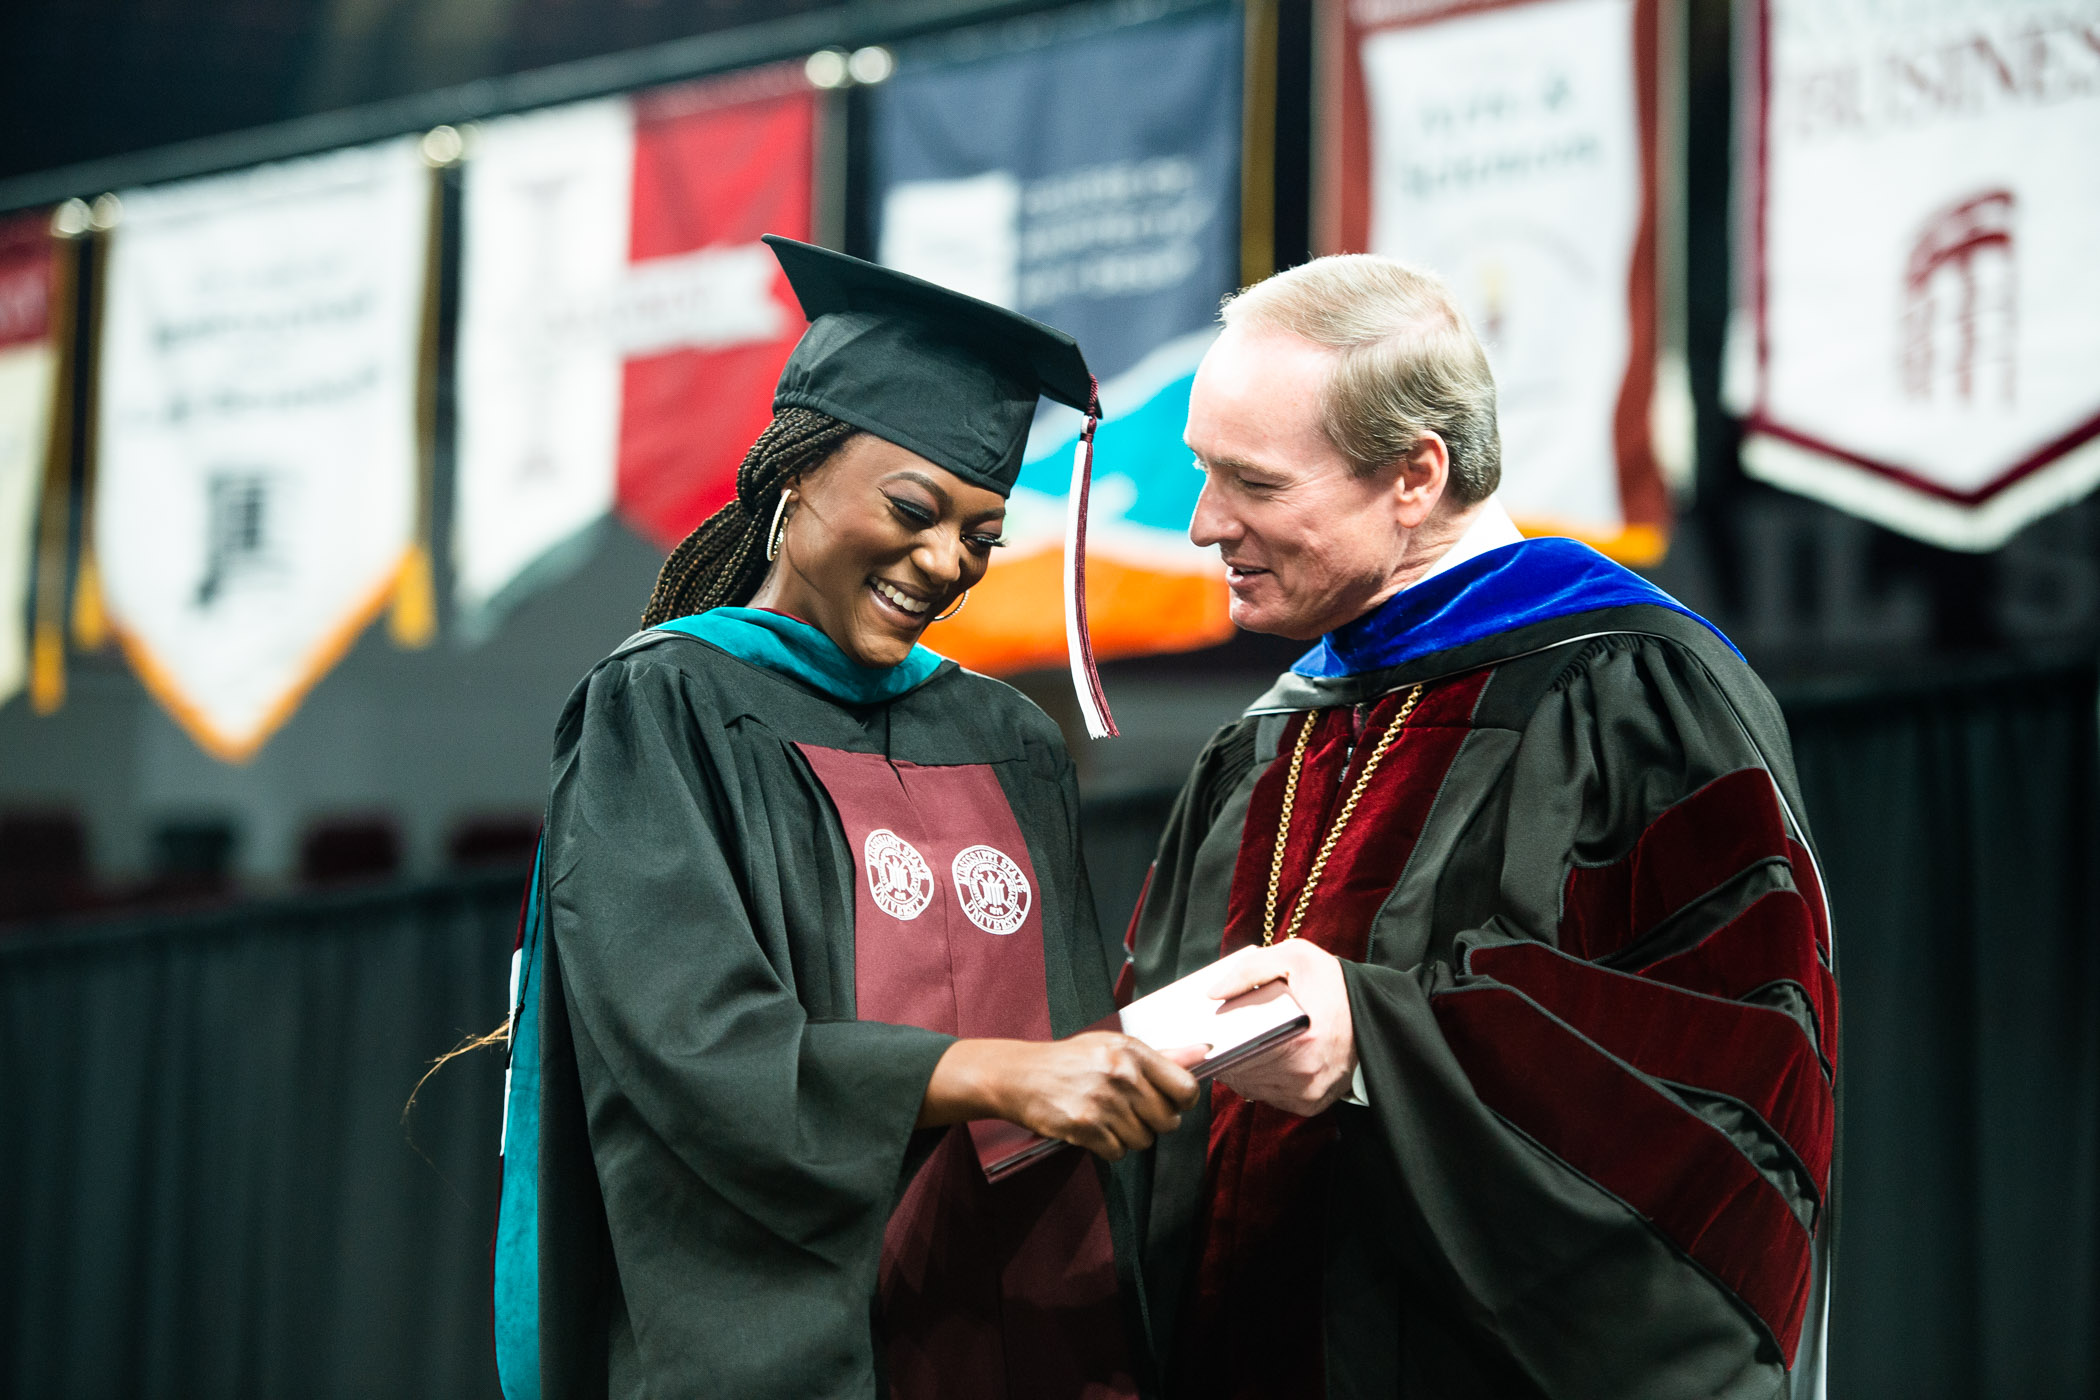 MSU Graduate NaToya Sanders crosses the stage to receive her diploma from MSU President Mark E. Keenum